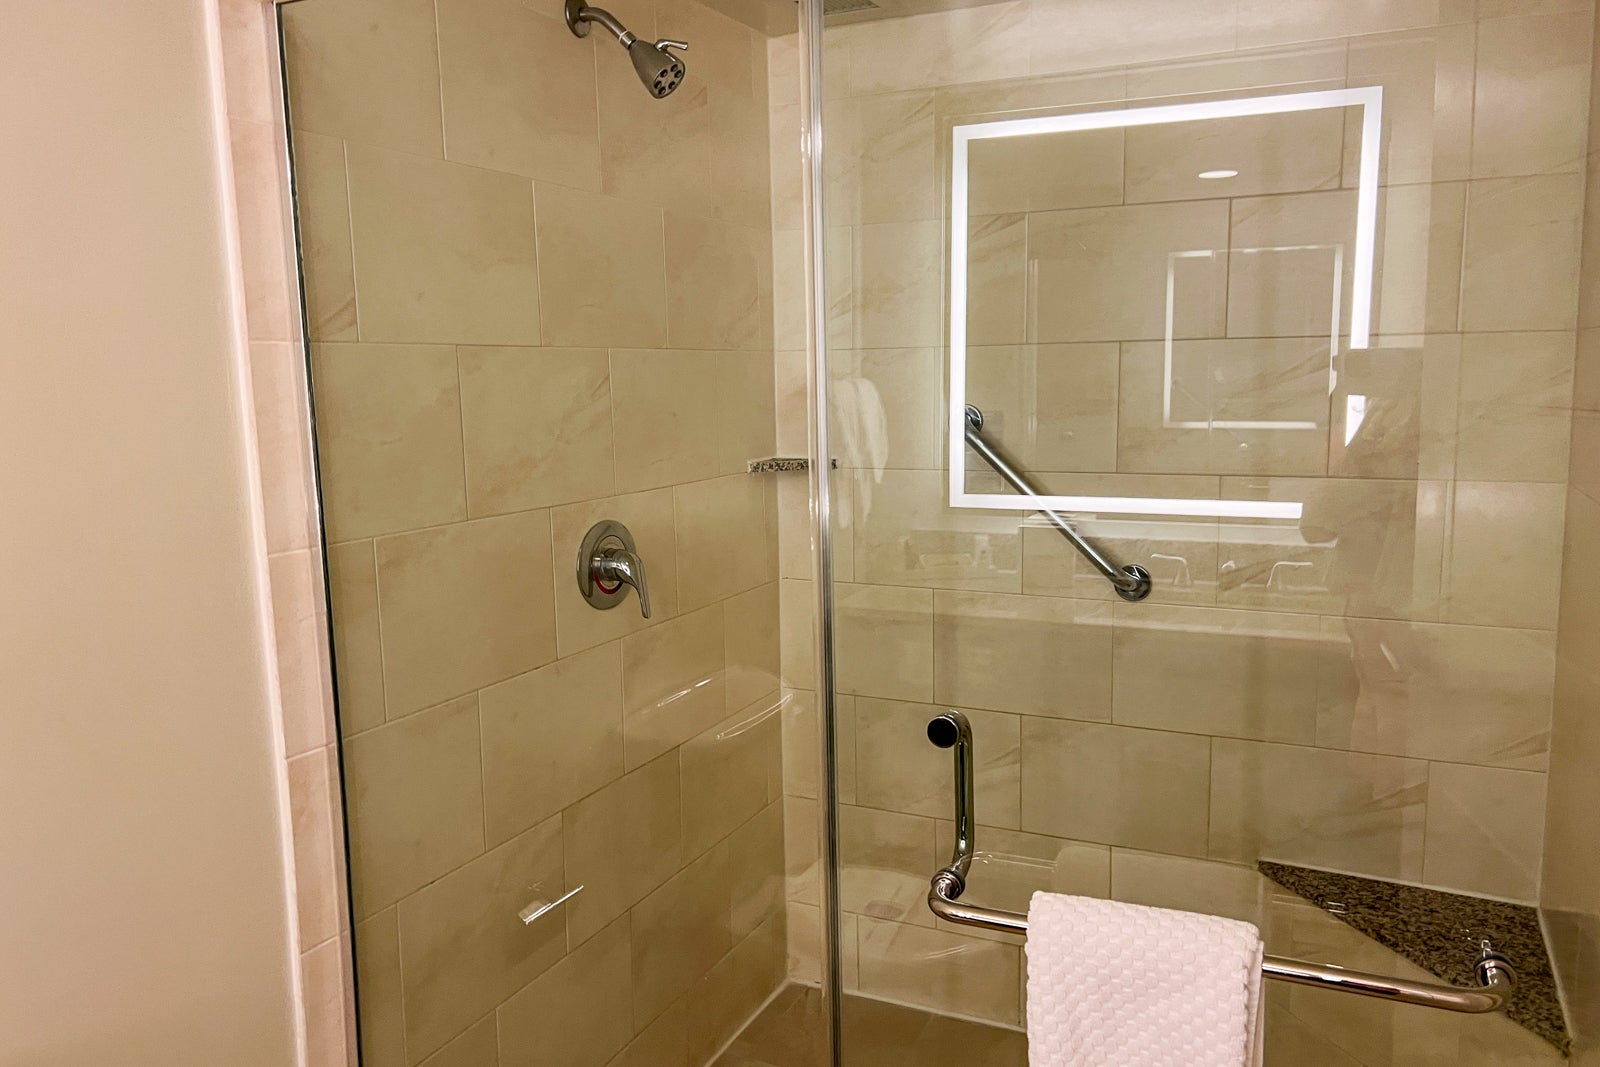 Hotel shower